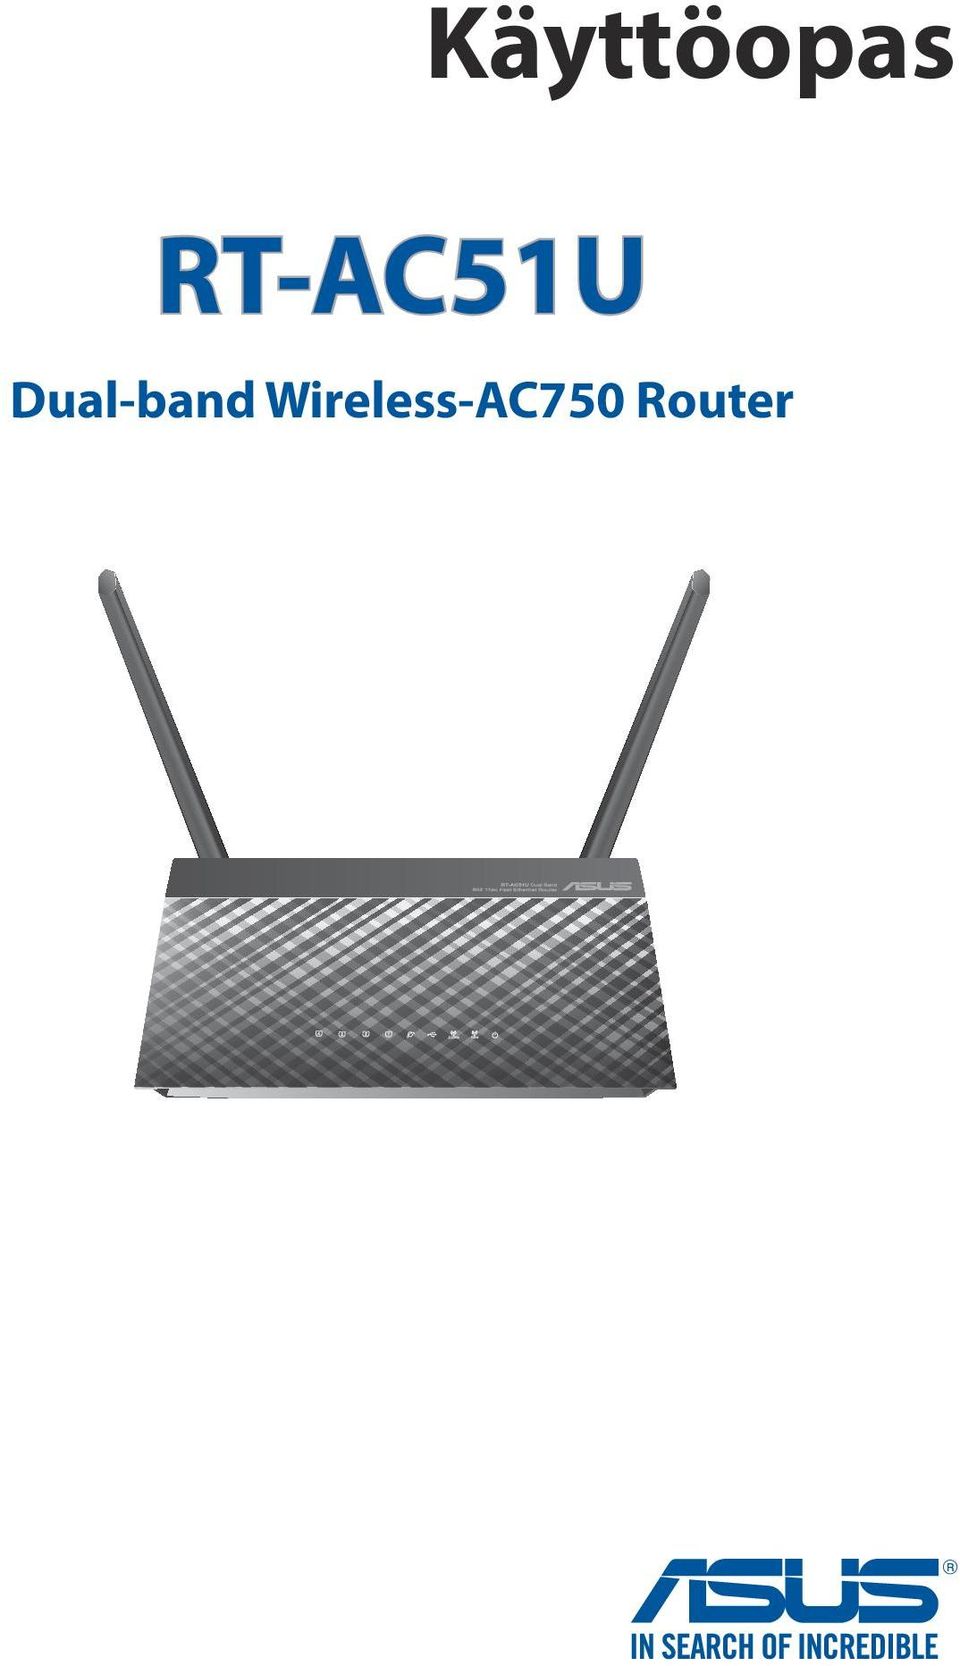 RT-AC51U. Käyttöopas. Dual-band Wireless-AC750 Router - PDF Free Download